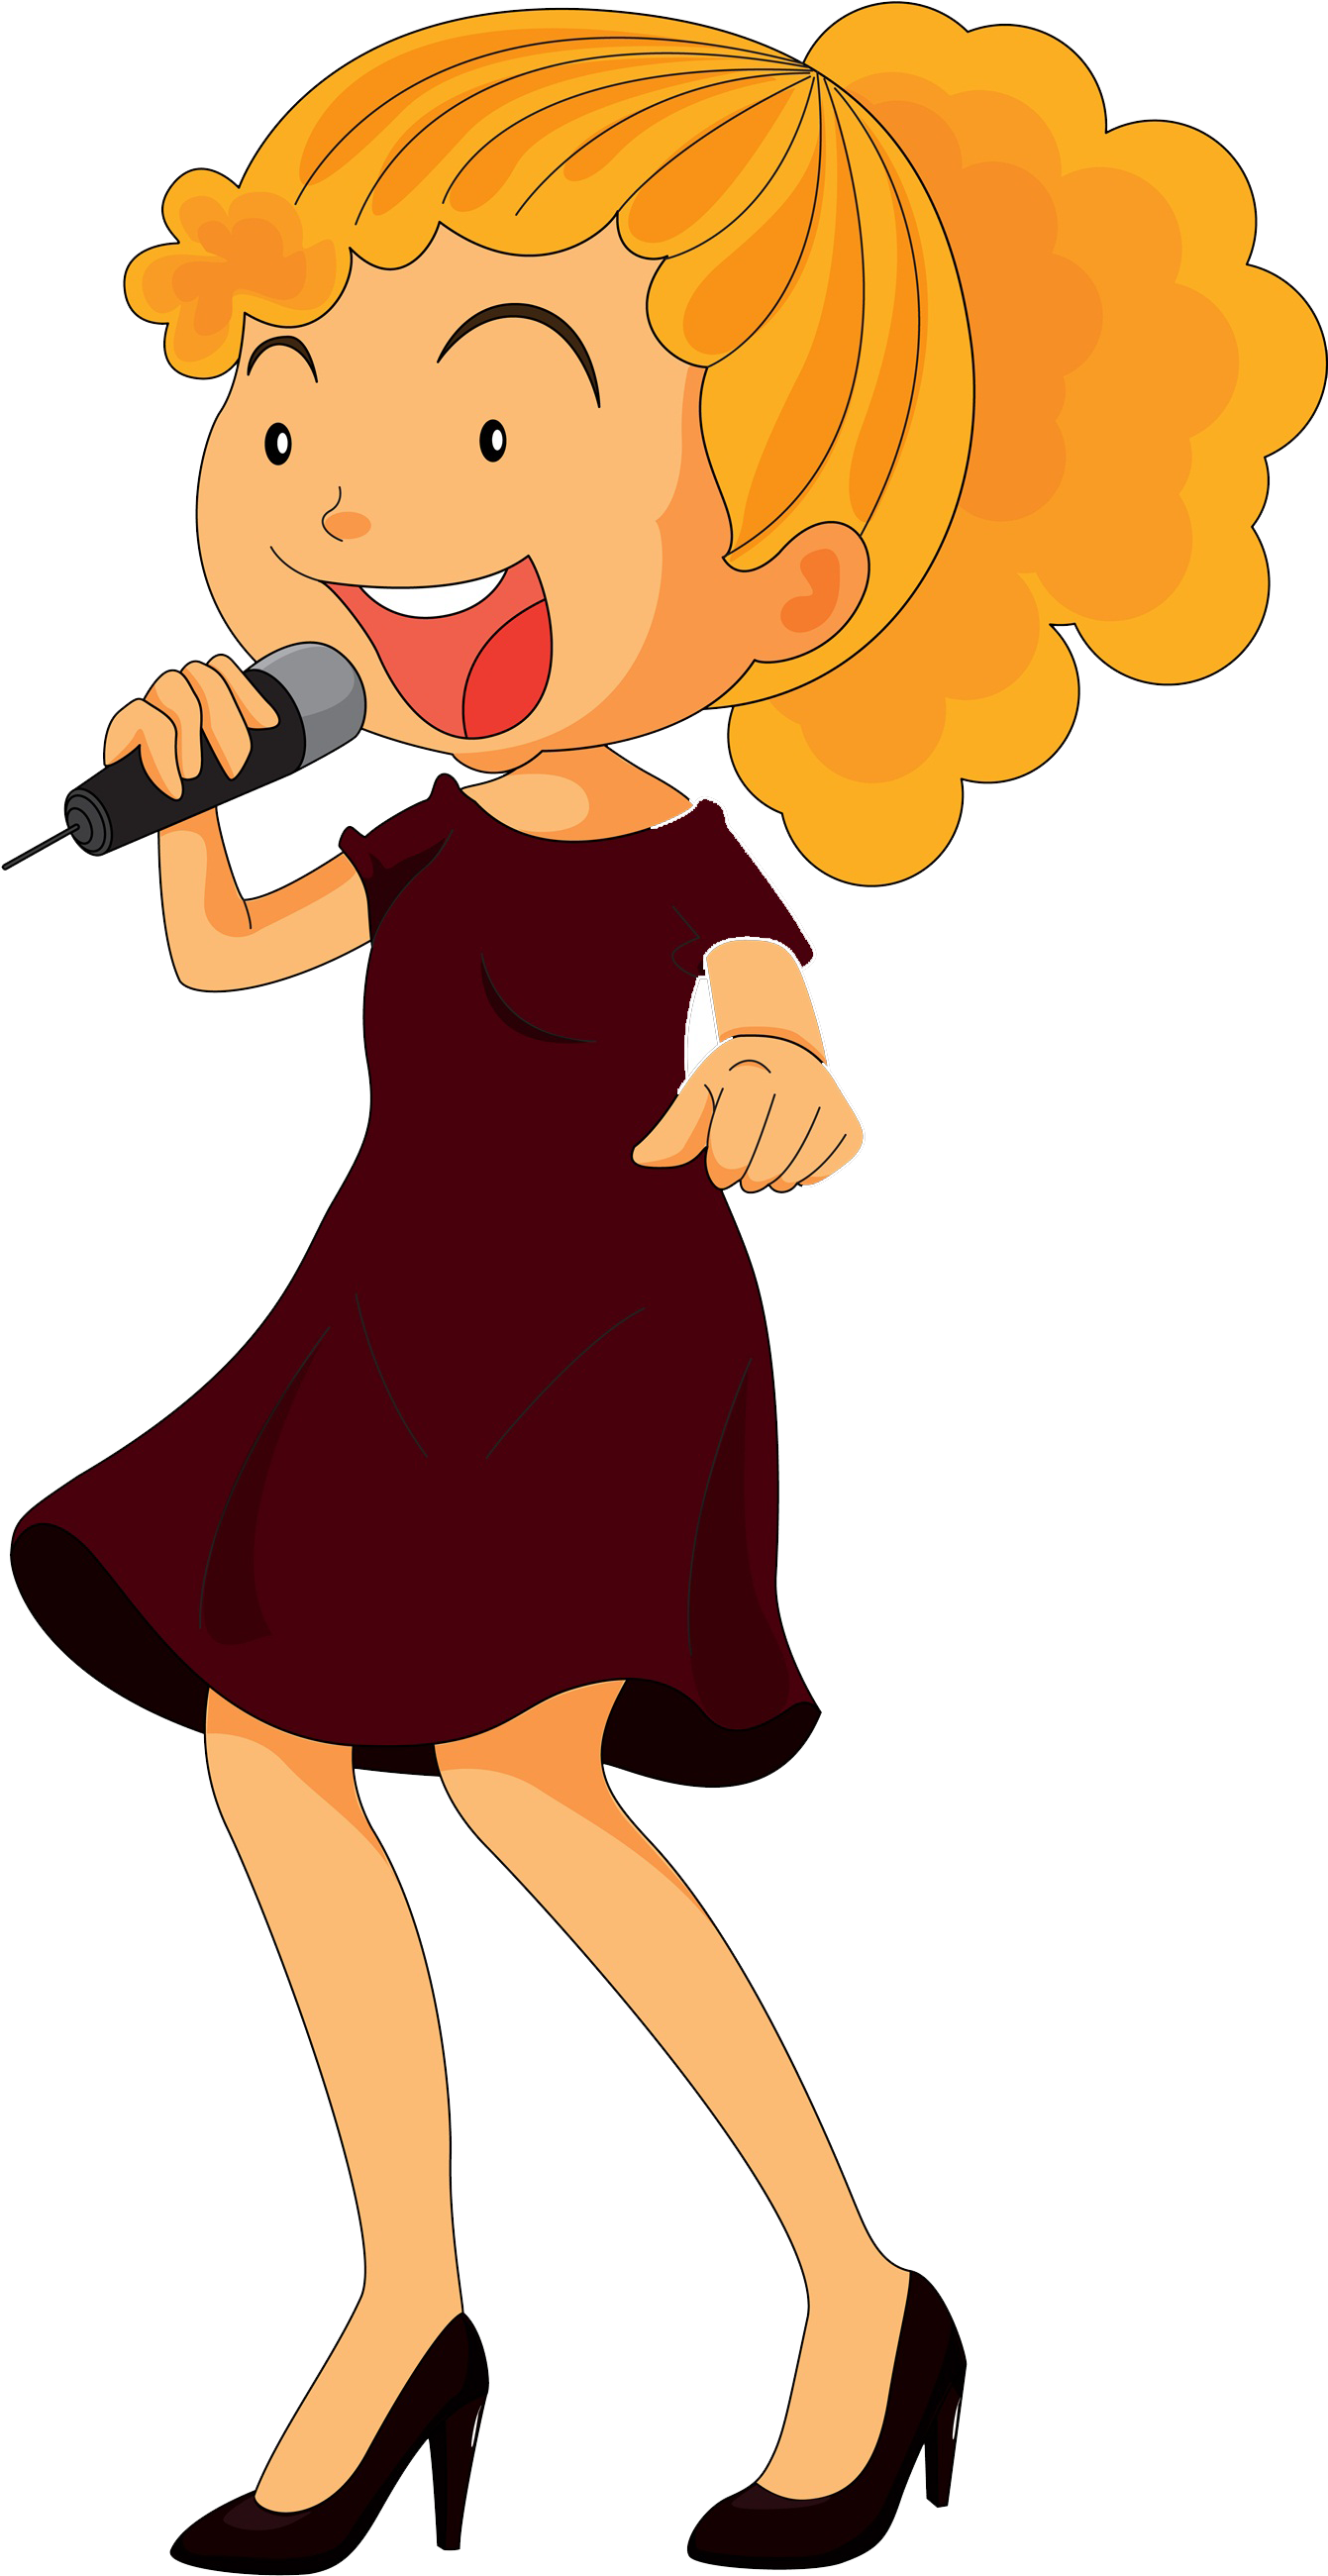 Microphone Girl Cartoon Illustration - Microphone Girl Cartoon Illustration (1340x2608)